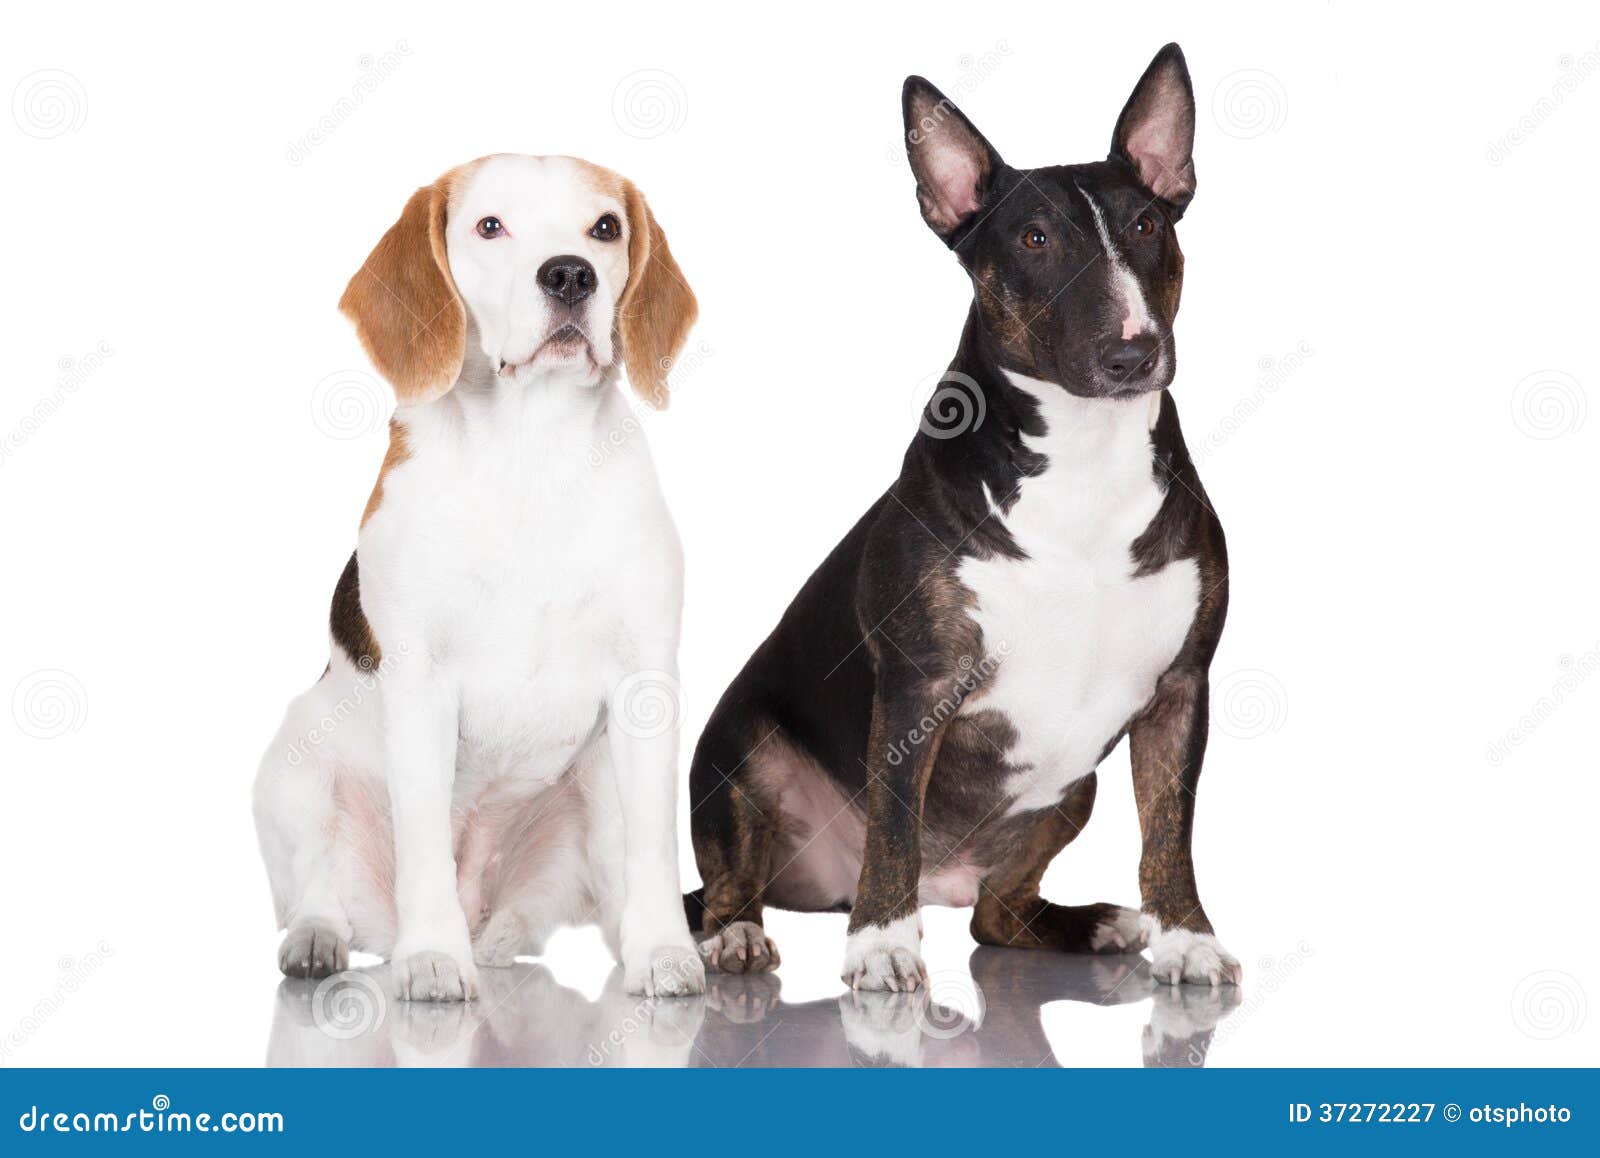 bull terrier beagle mix